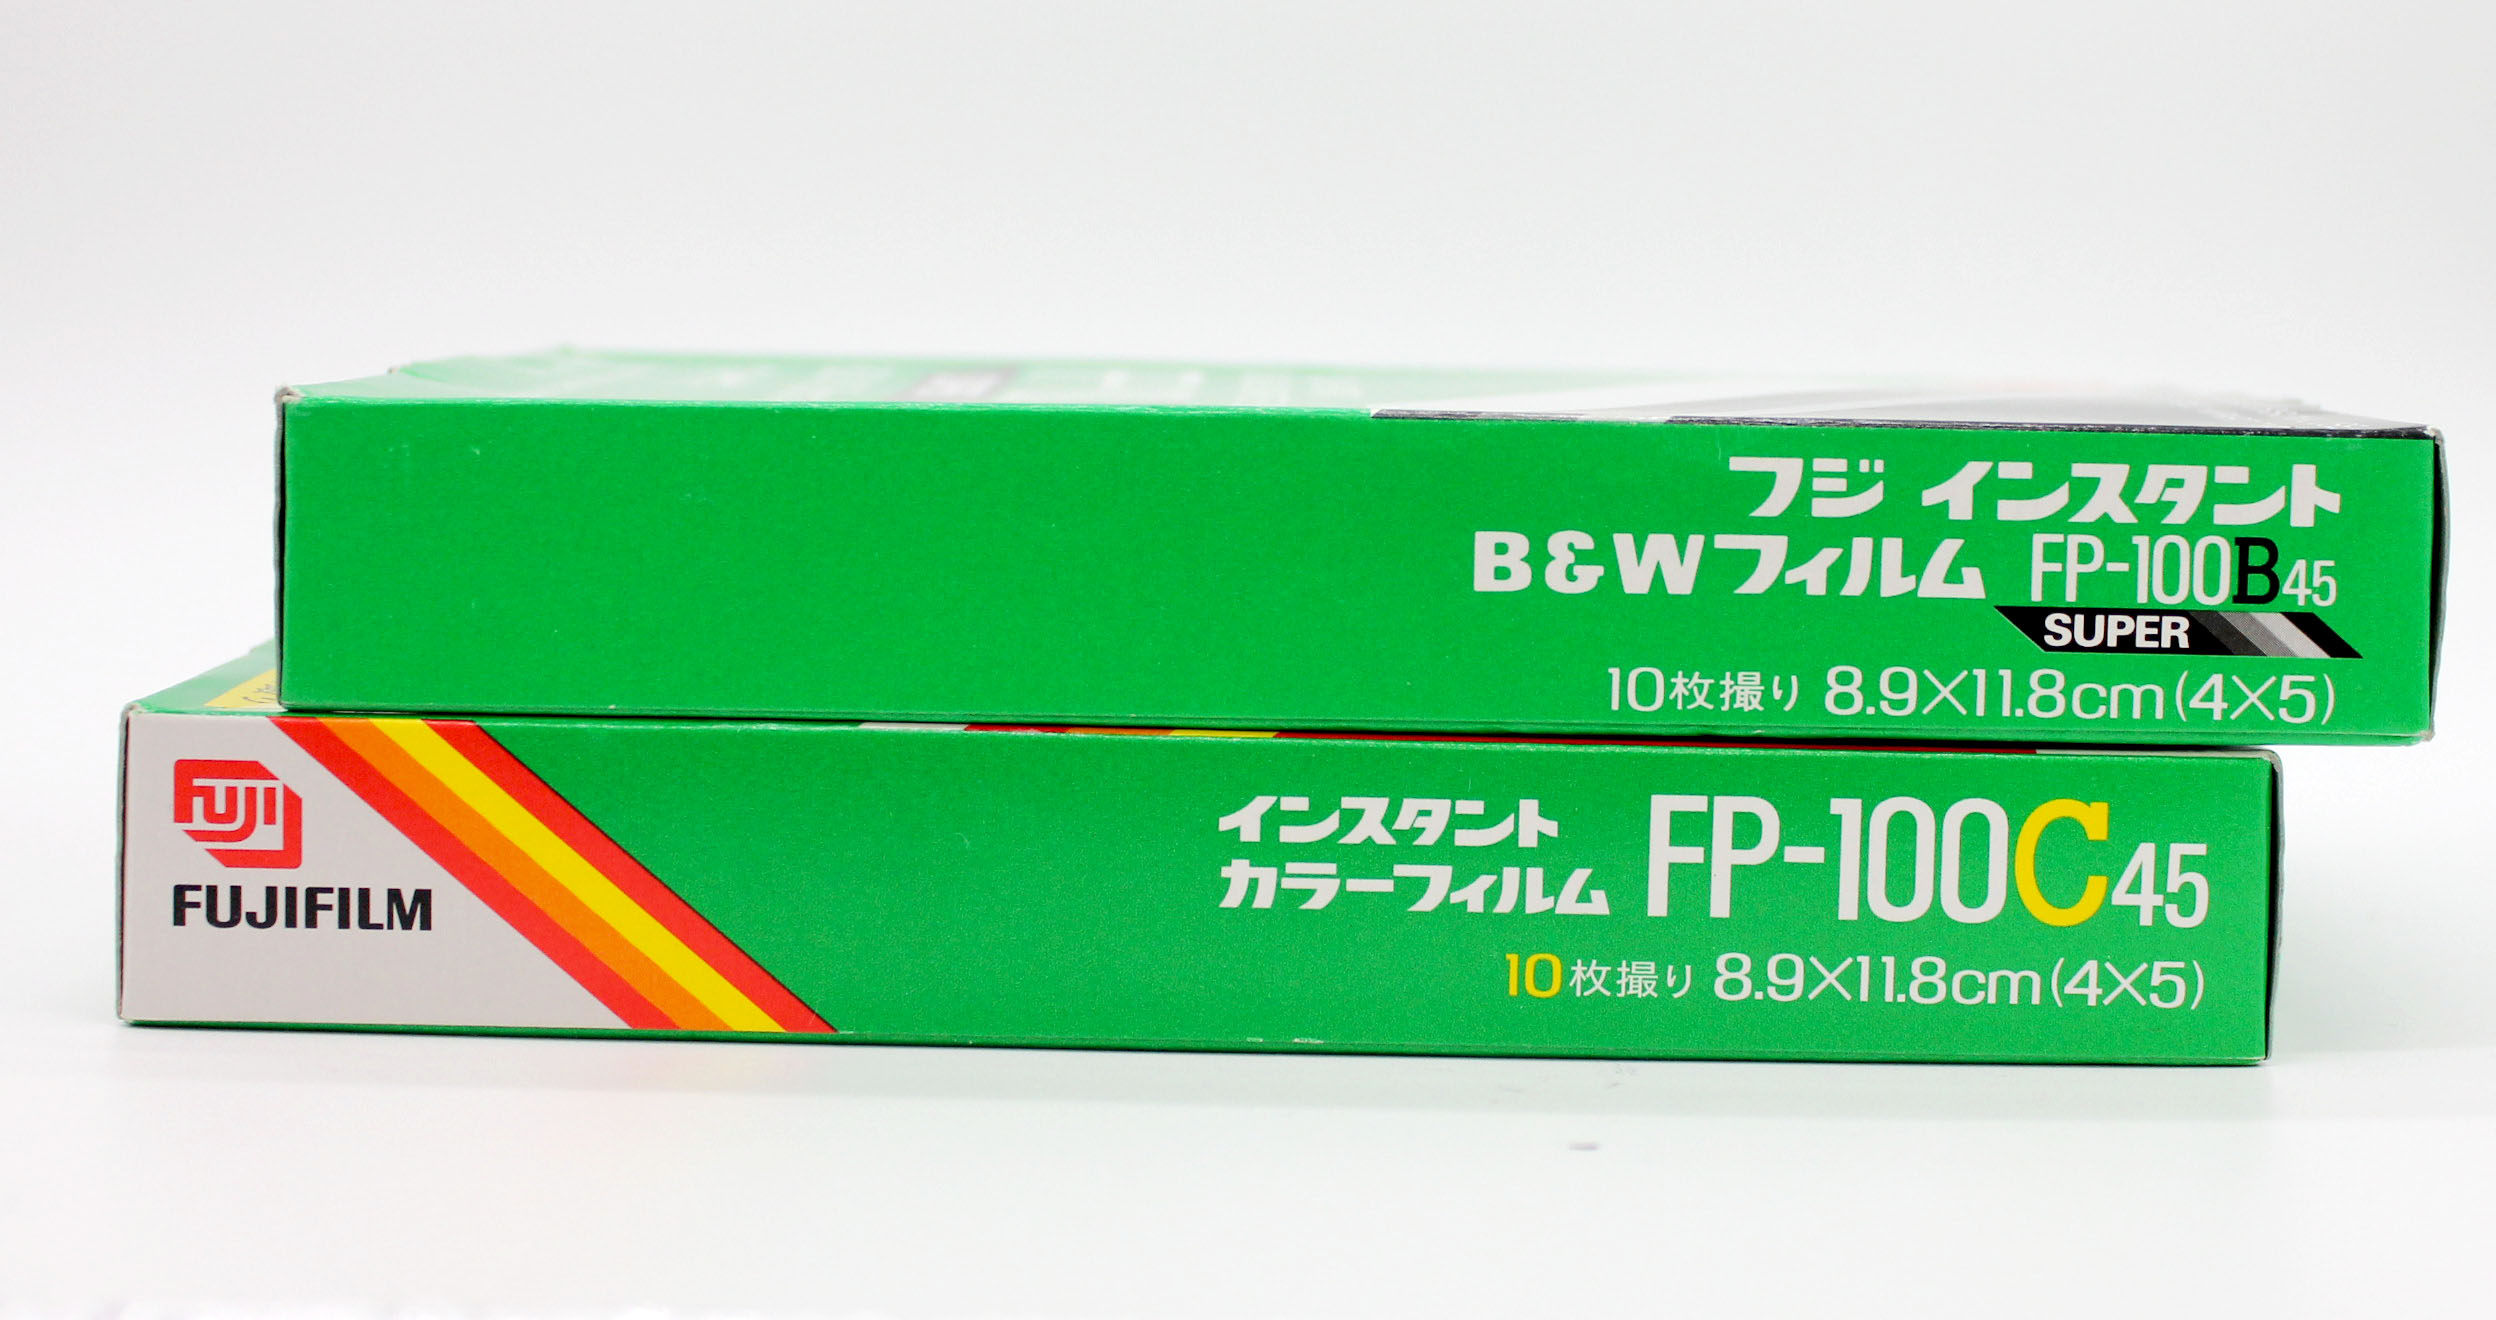  Fuji Fujifilm FP-100C 45 Color & FP-100B 45 Black & White 4x5 Instant Film Pack Expired from Japan Photo 5